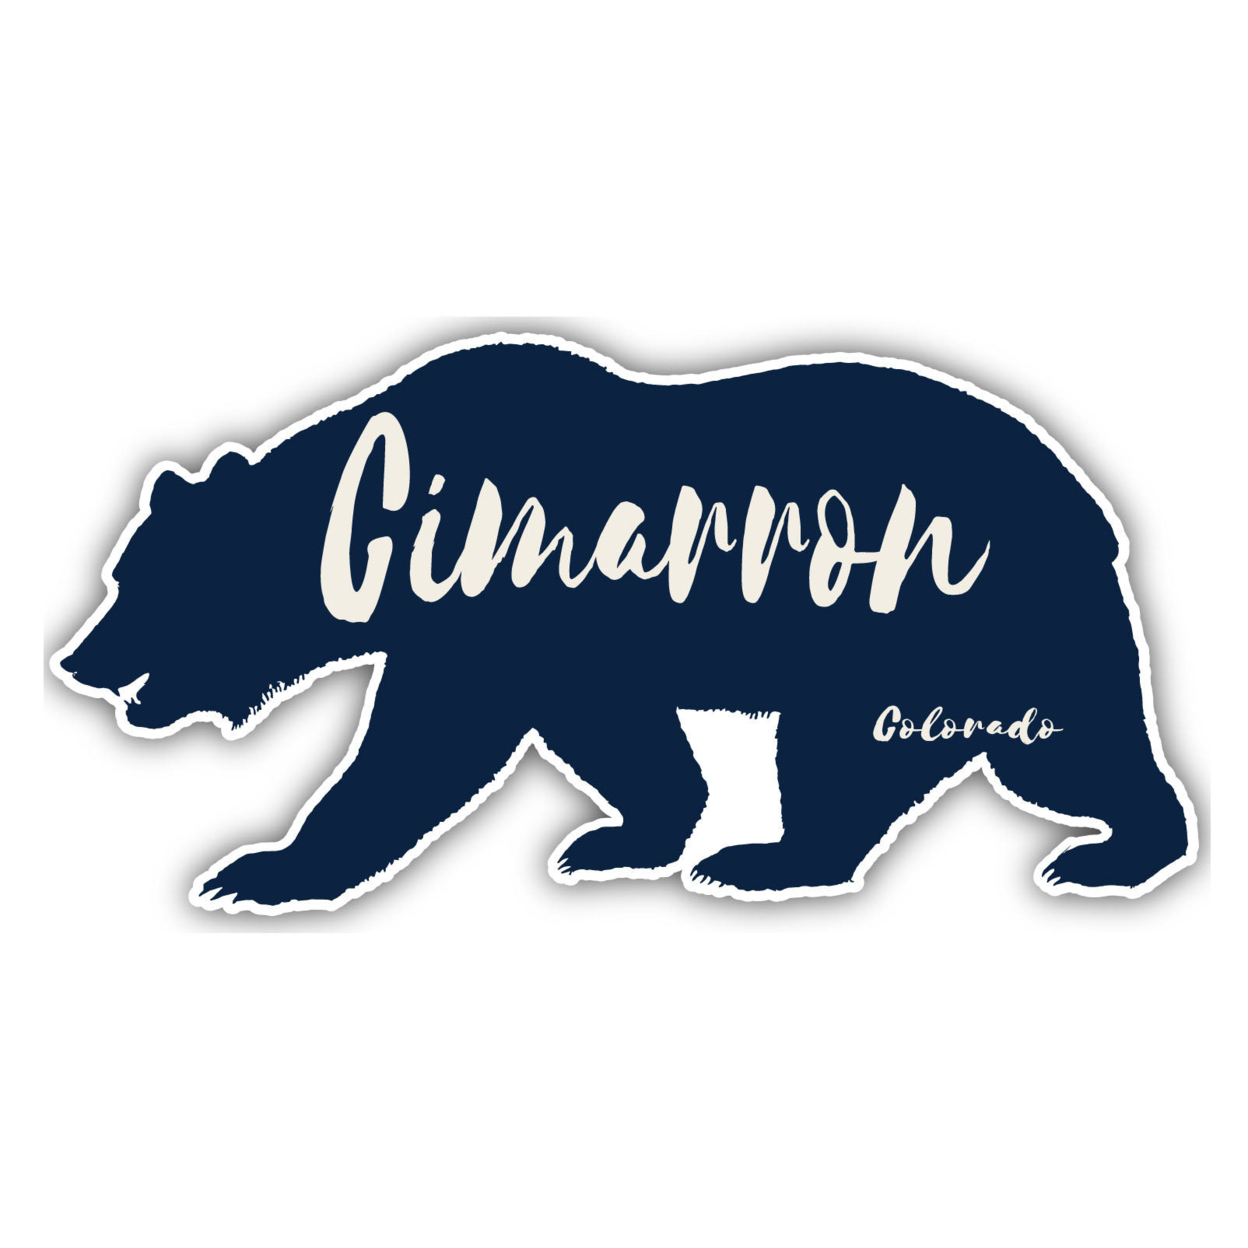 Cimarron Colorado Souvenir Decorative Stickers (Choose Theme And Size) - 4-Pack, 4-Inch, Bear